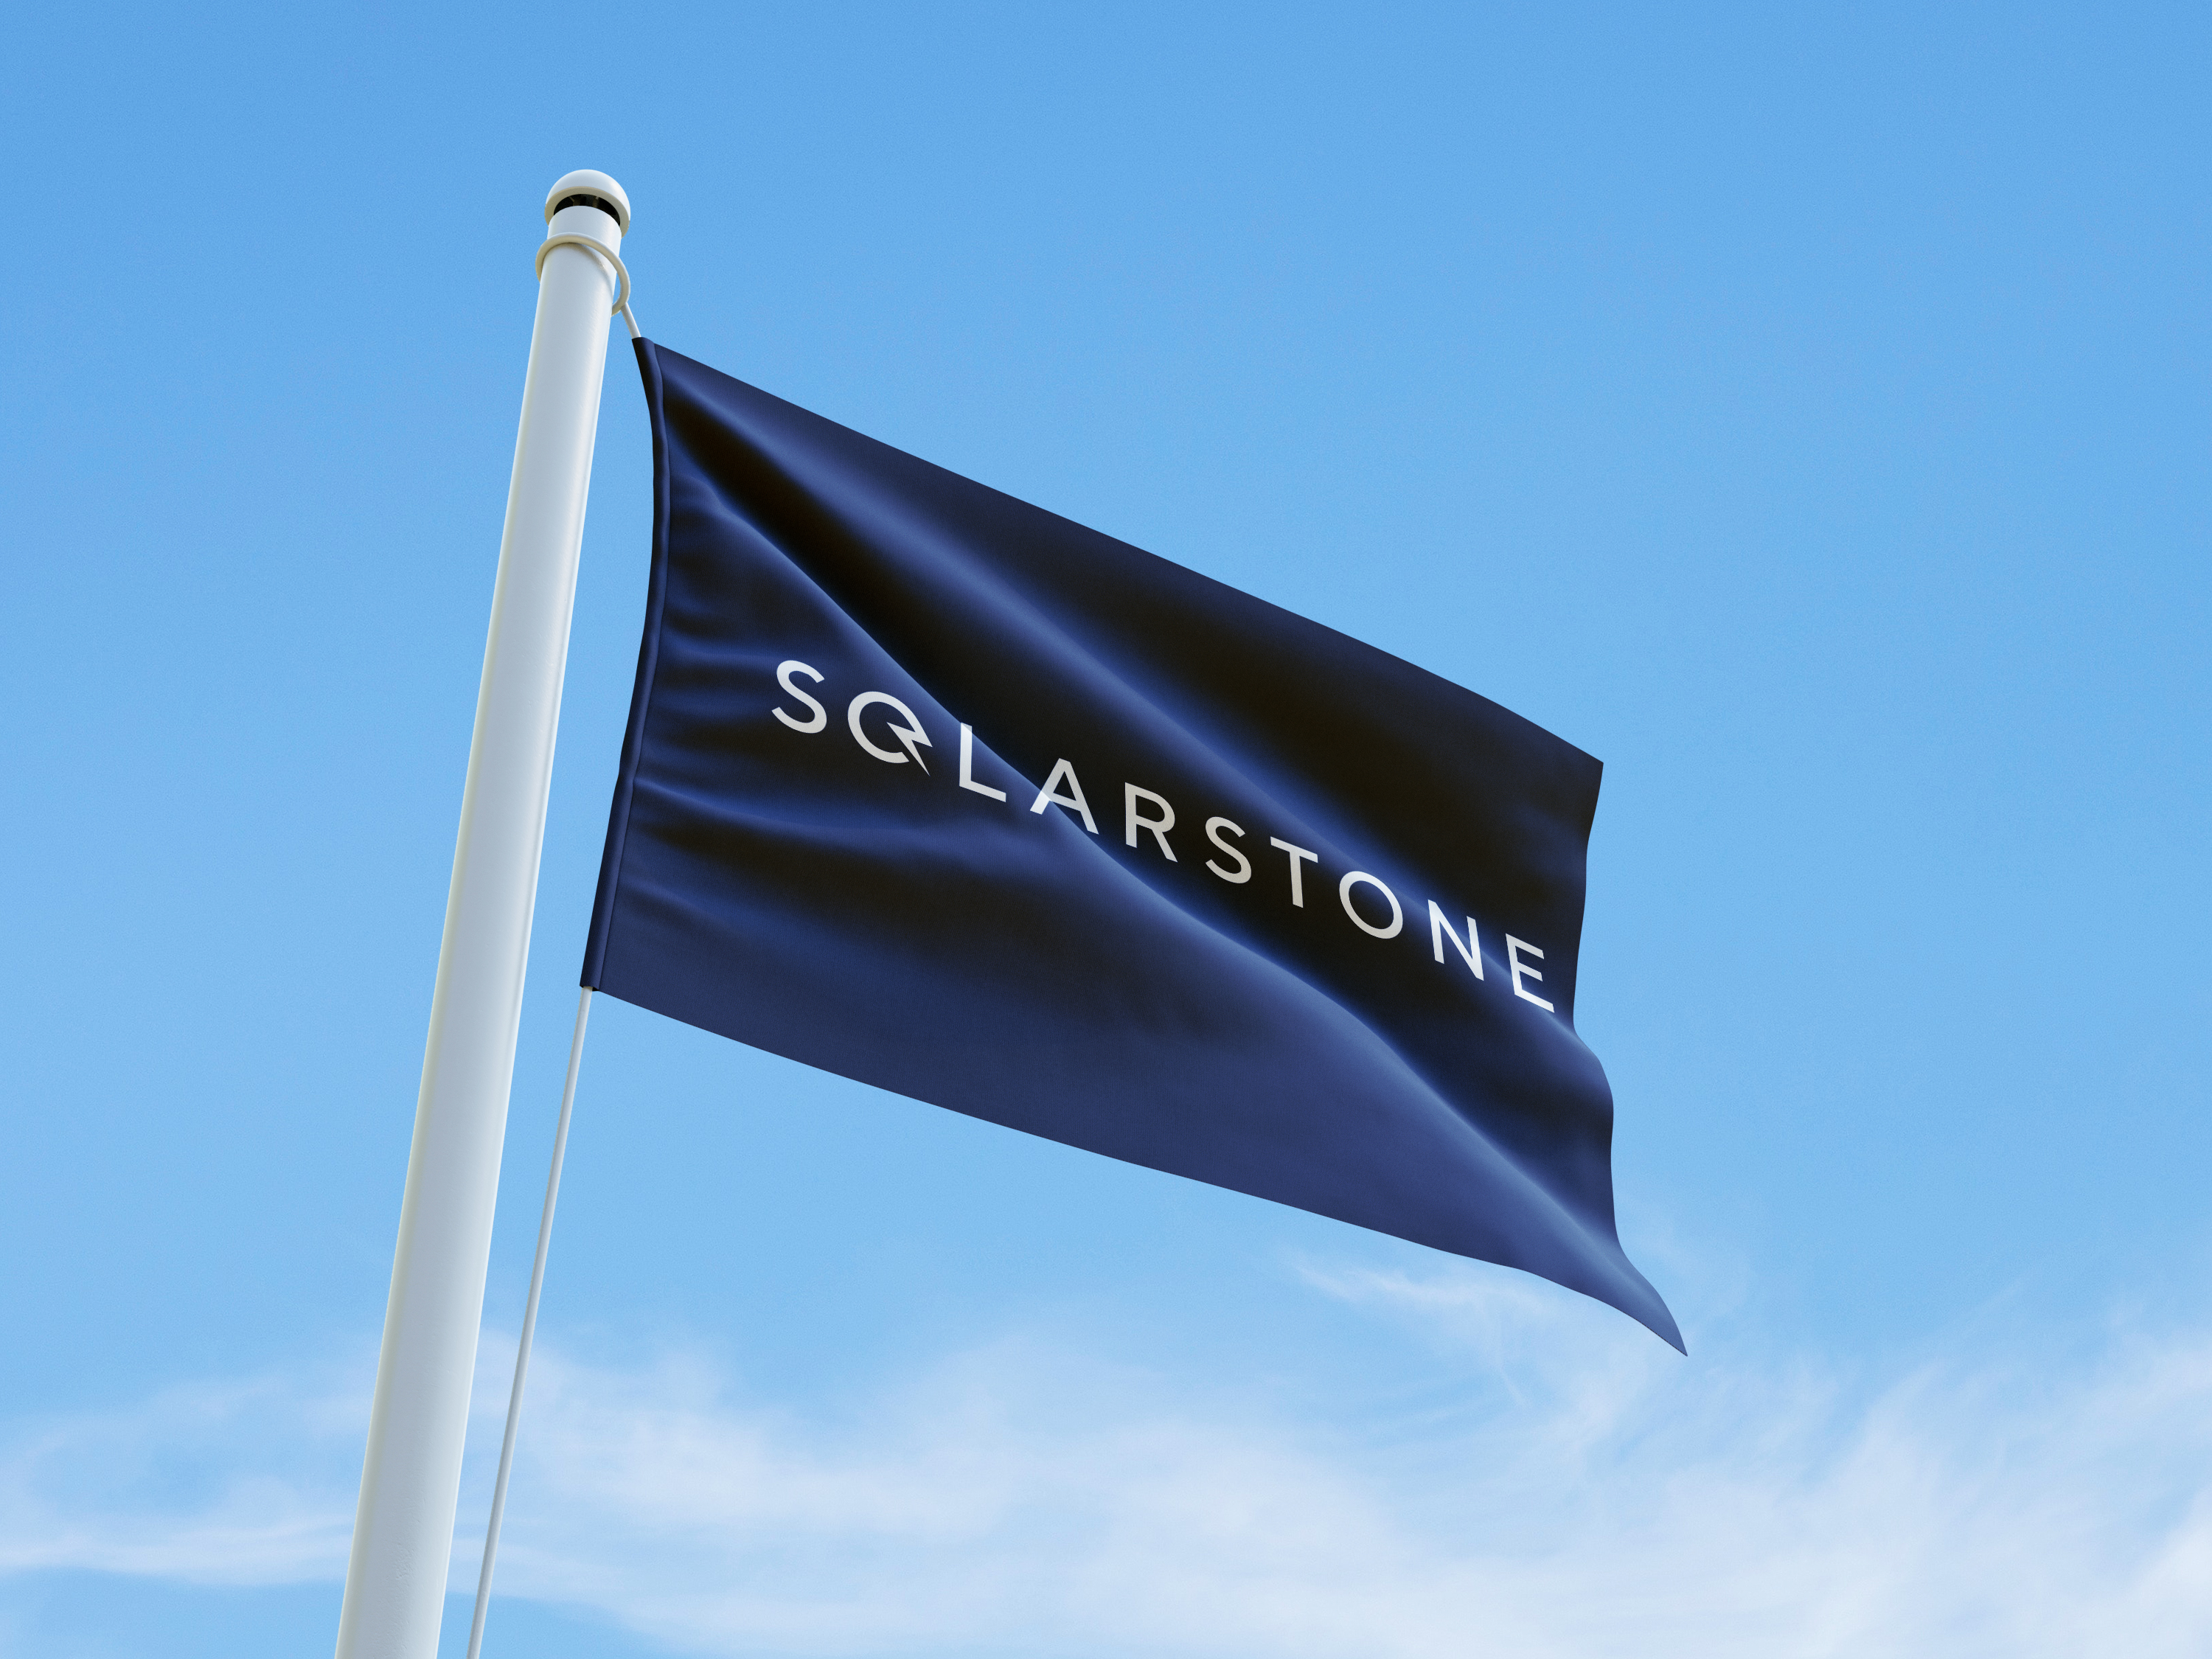 Blå flagga med en vit Solarstone-logotyp på